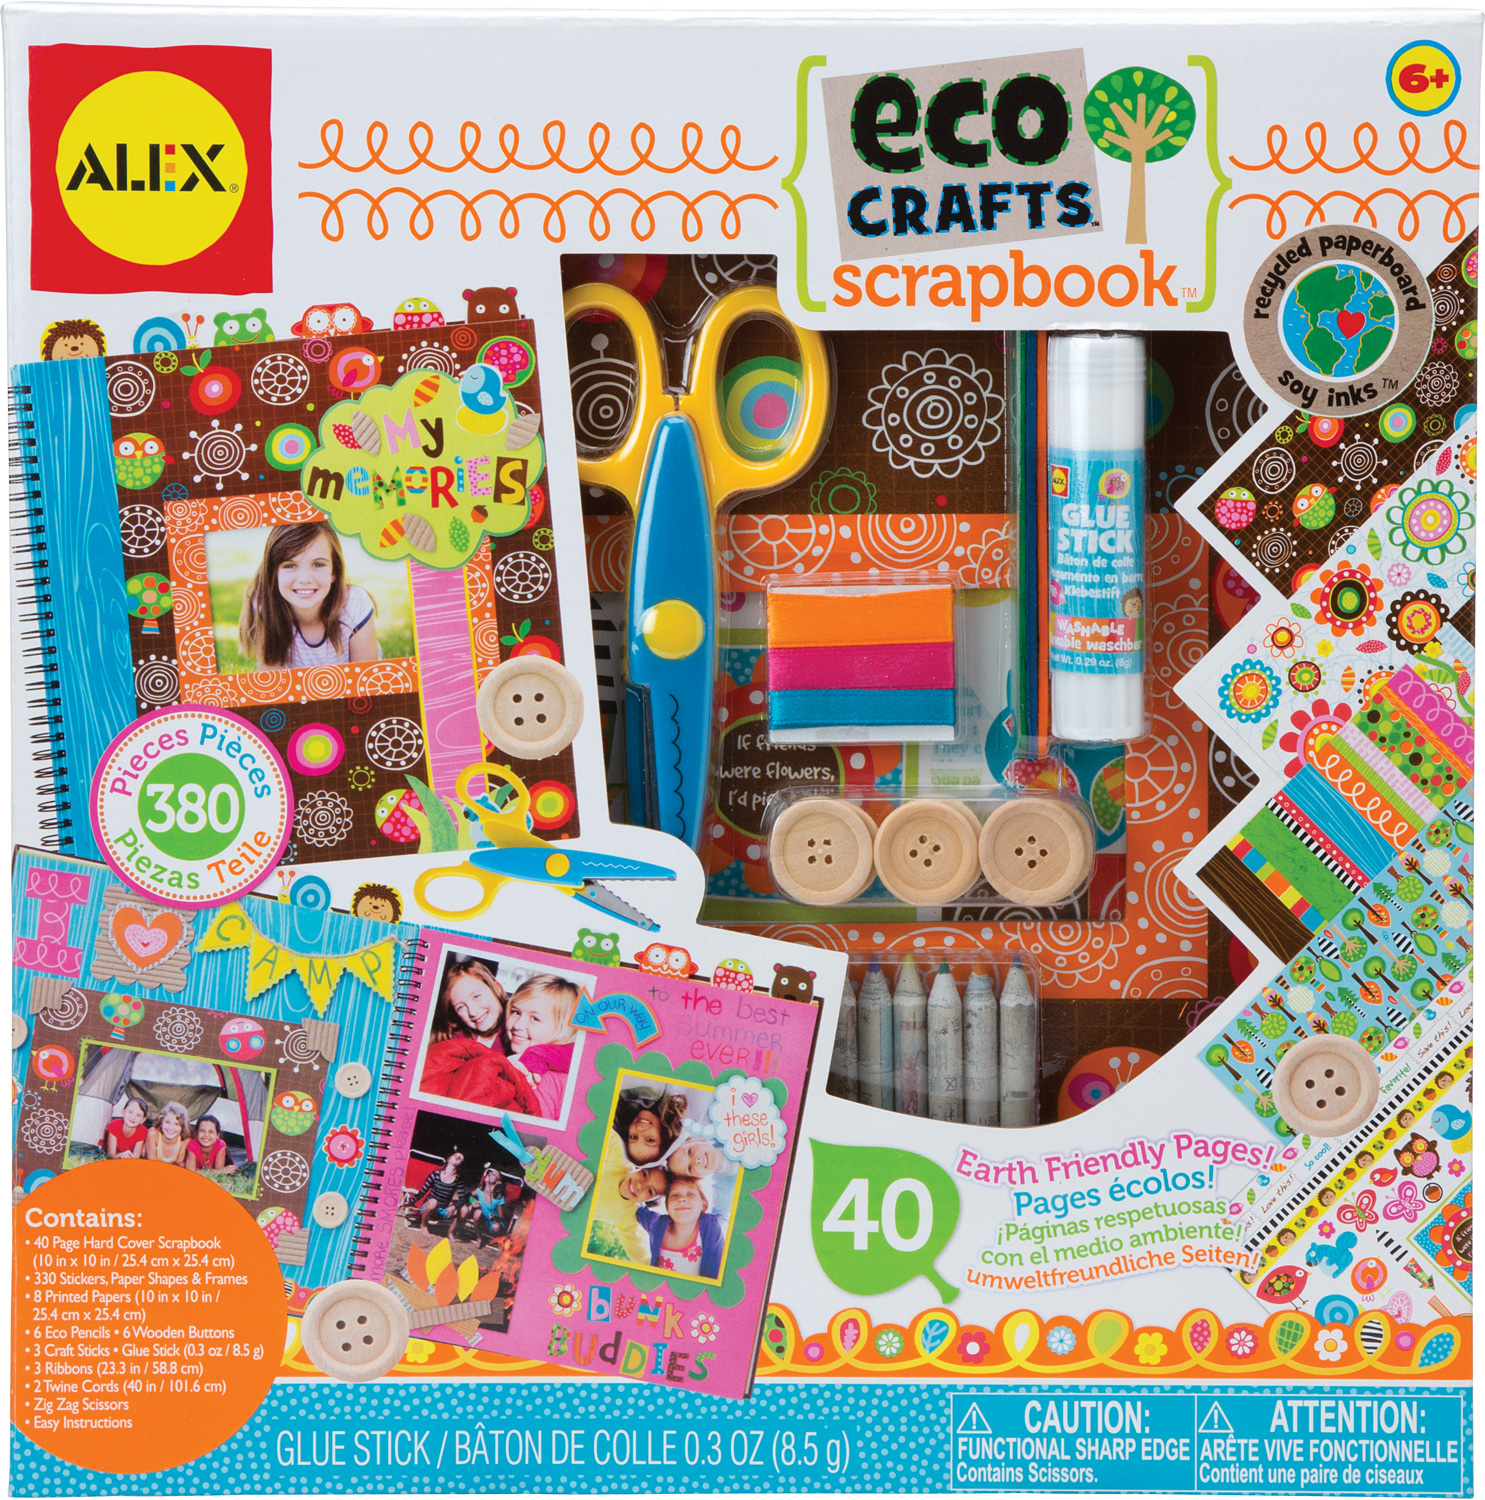 alex toys craft eco crafts scrapbook